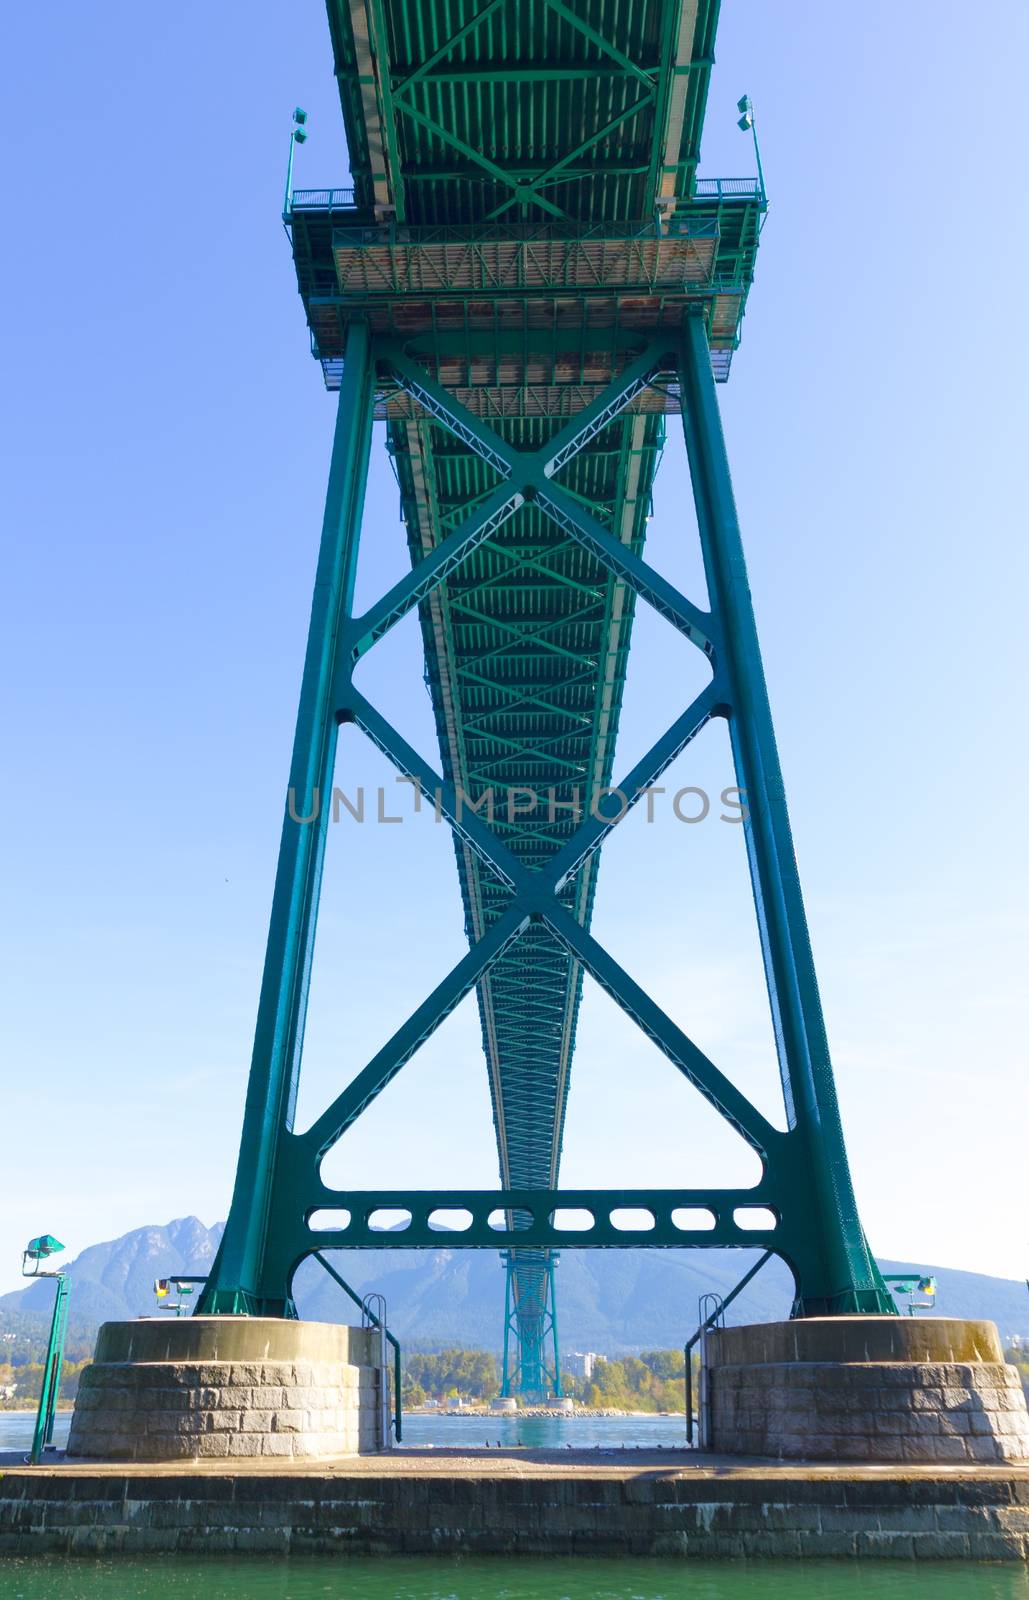 Green Metalic Lions Gate Bridge - Vancouver, Canada by 1shostak